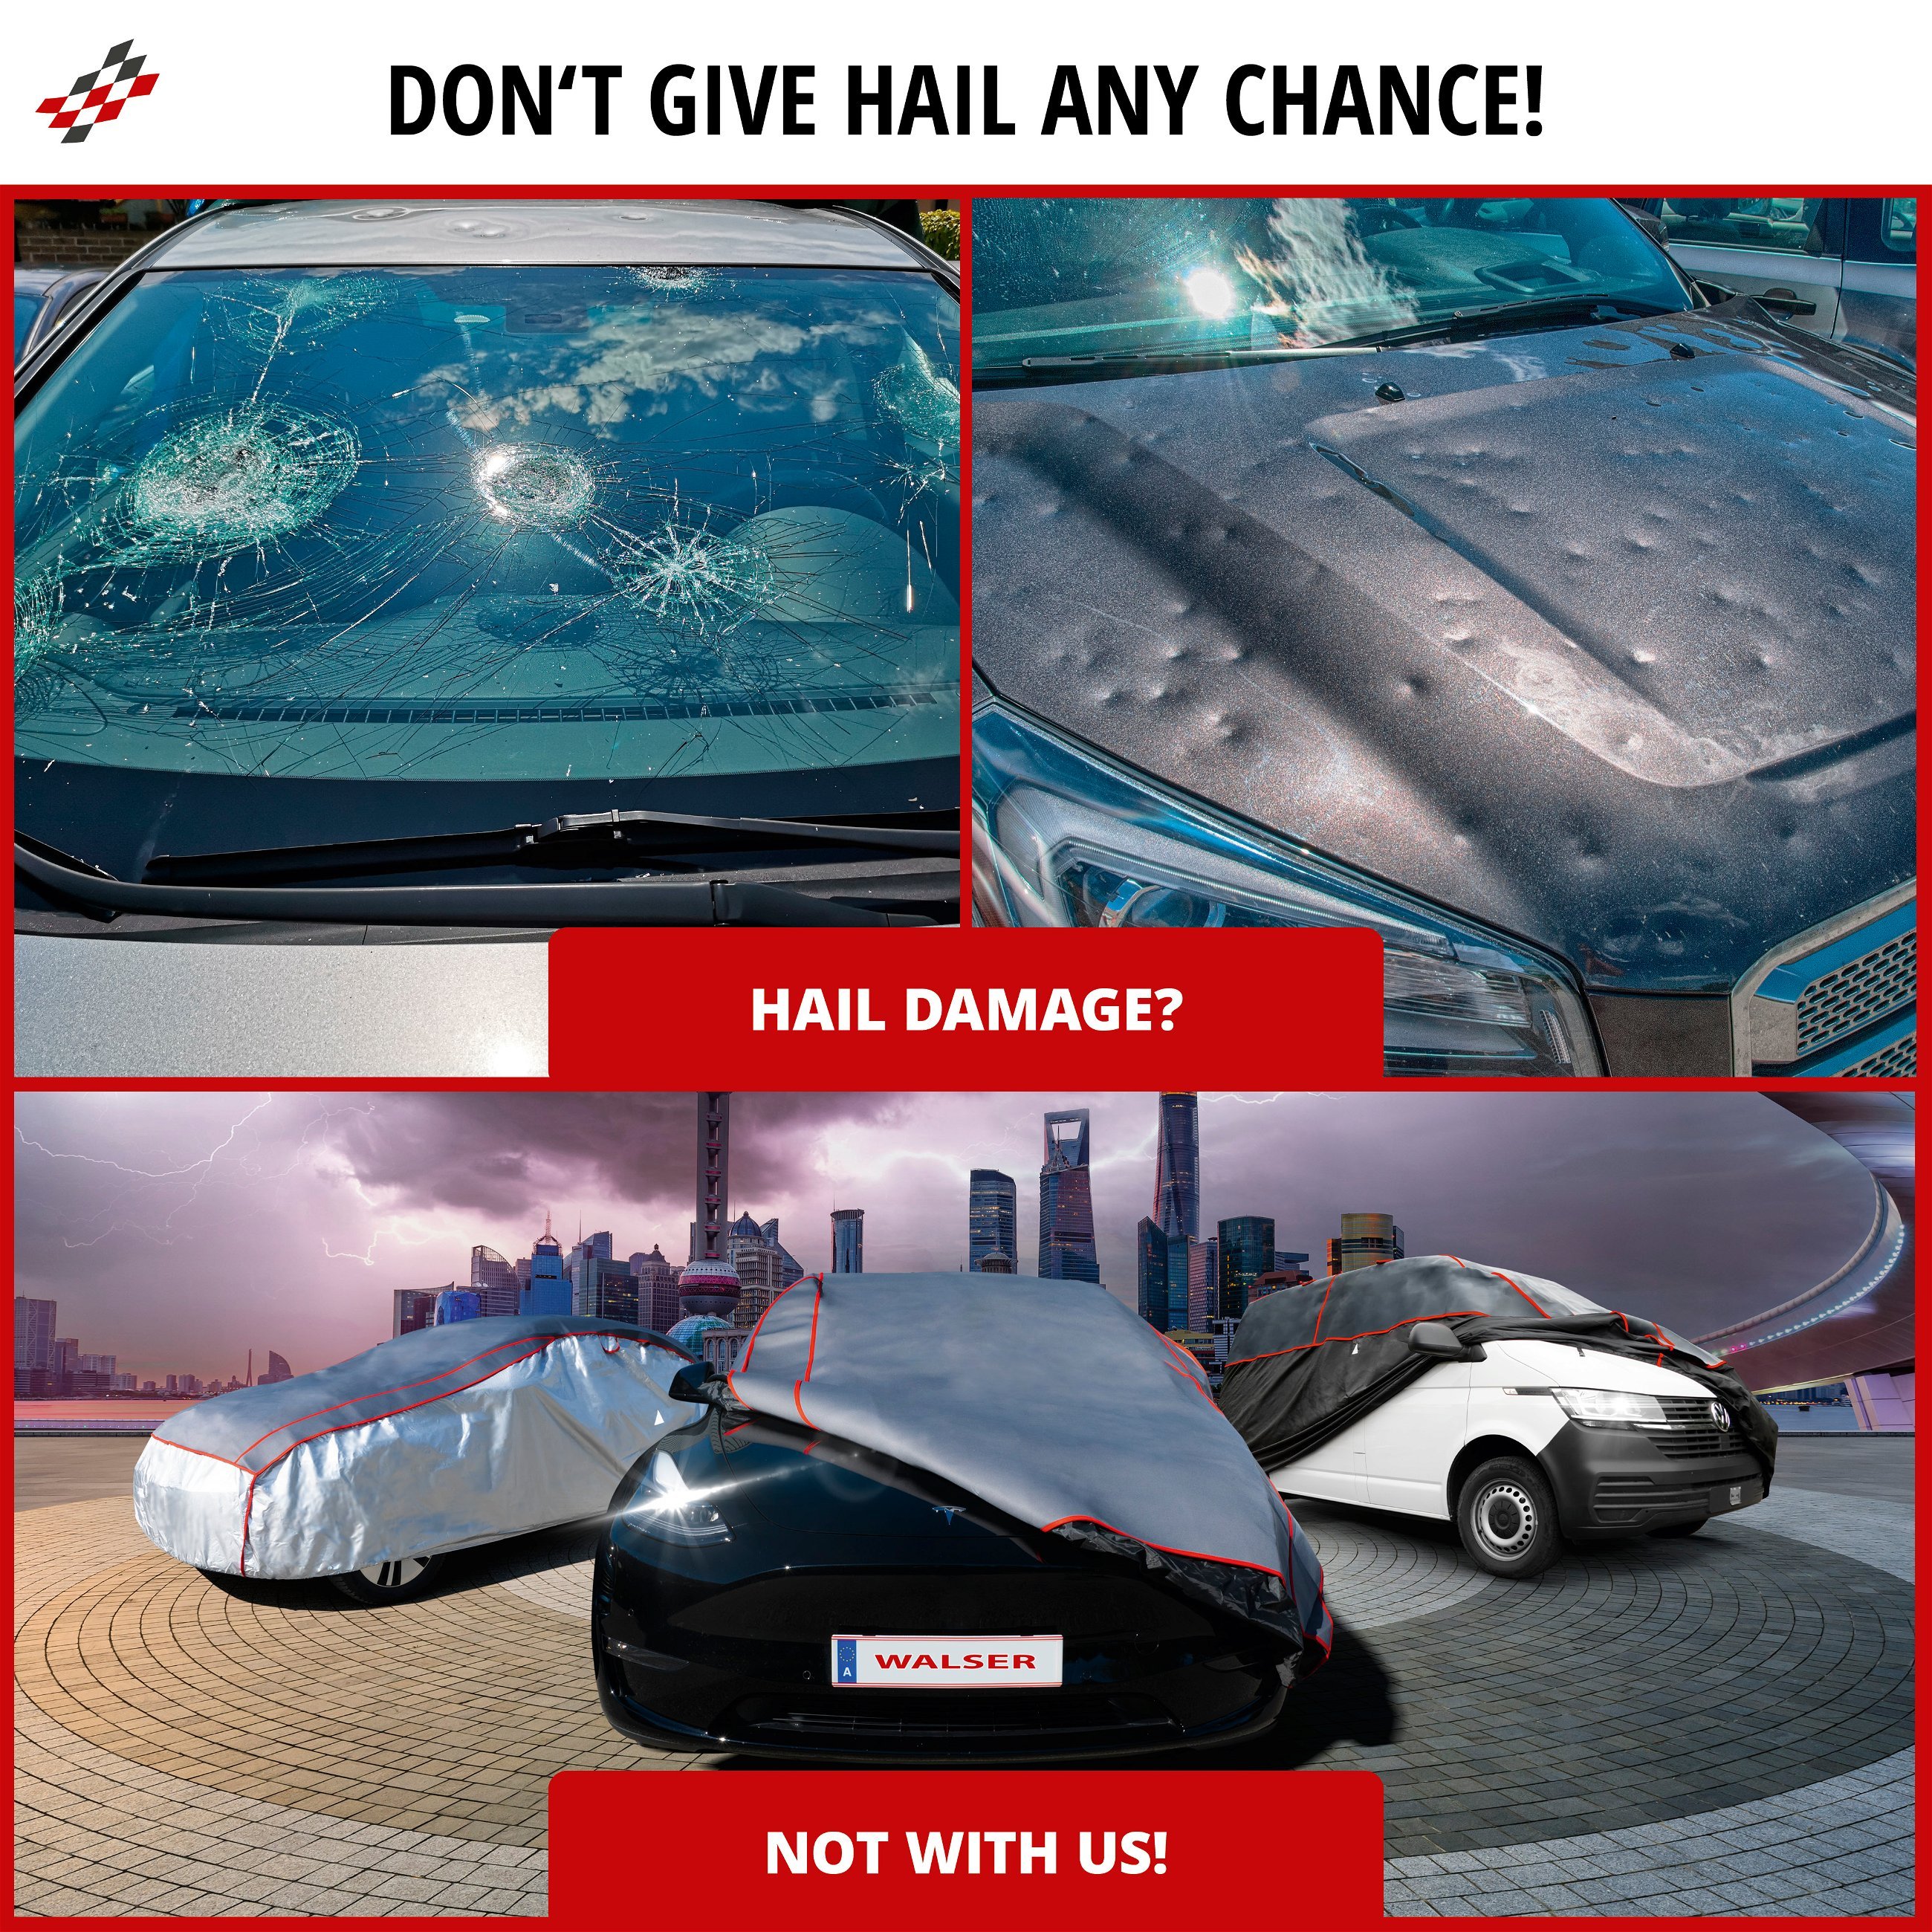 Car hail protection cover Premium Hybrid size S